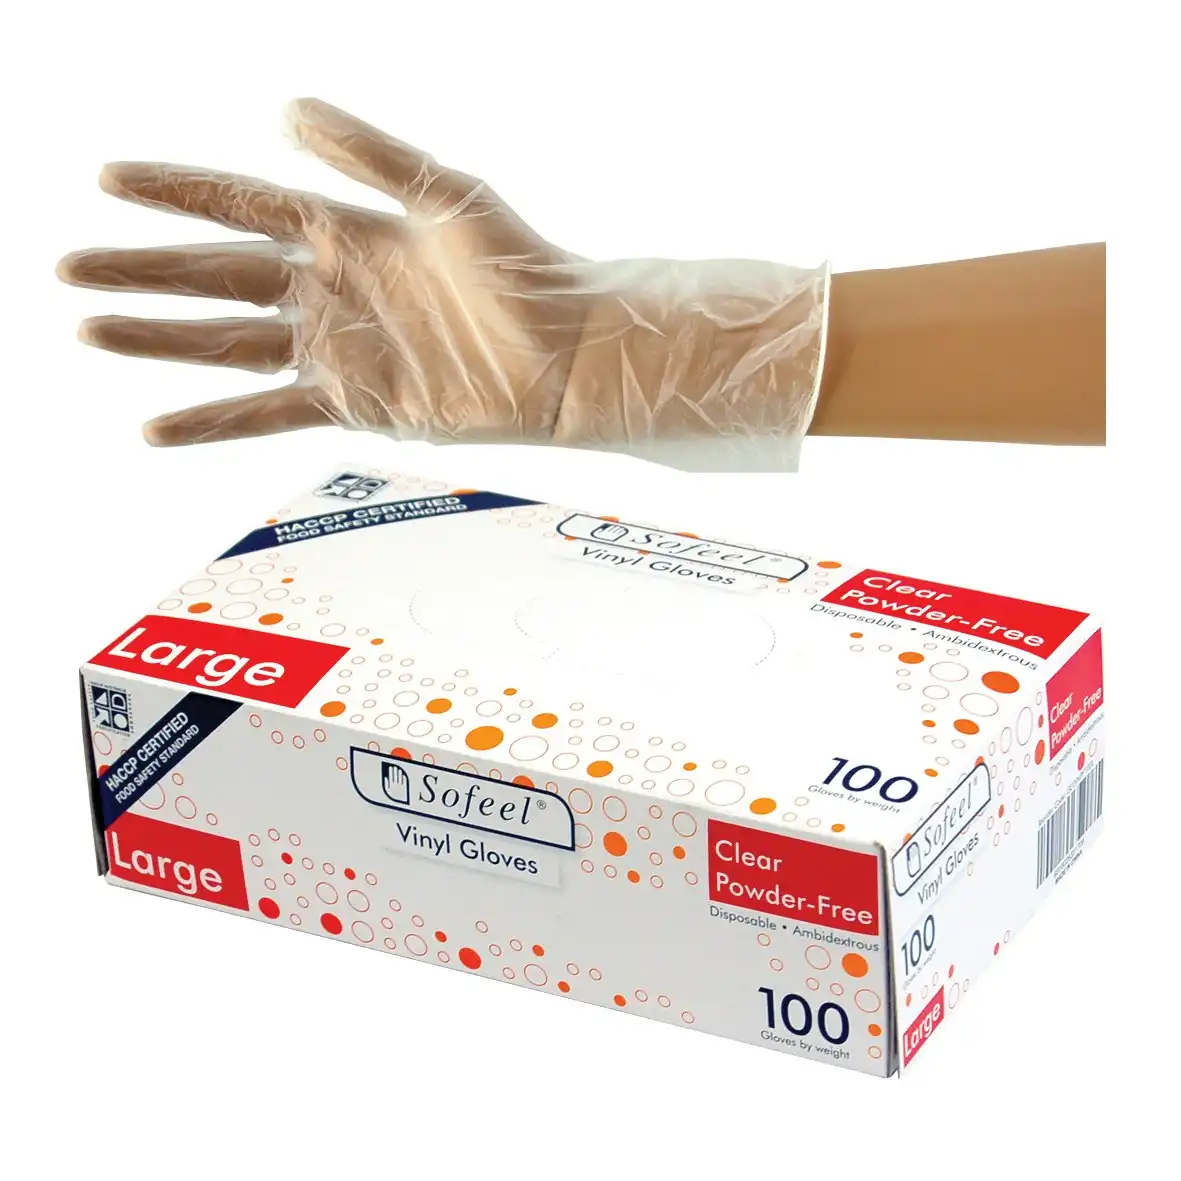 Sofeel Vinyl Powder Free Gloves 5.0g Large Clear 100 Box